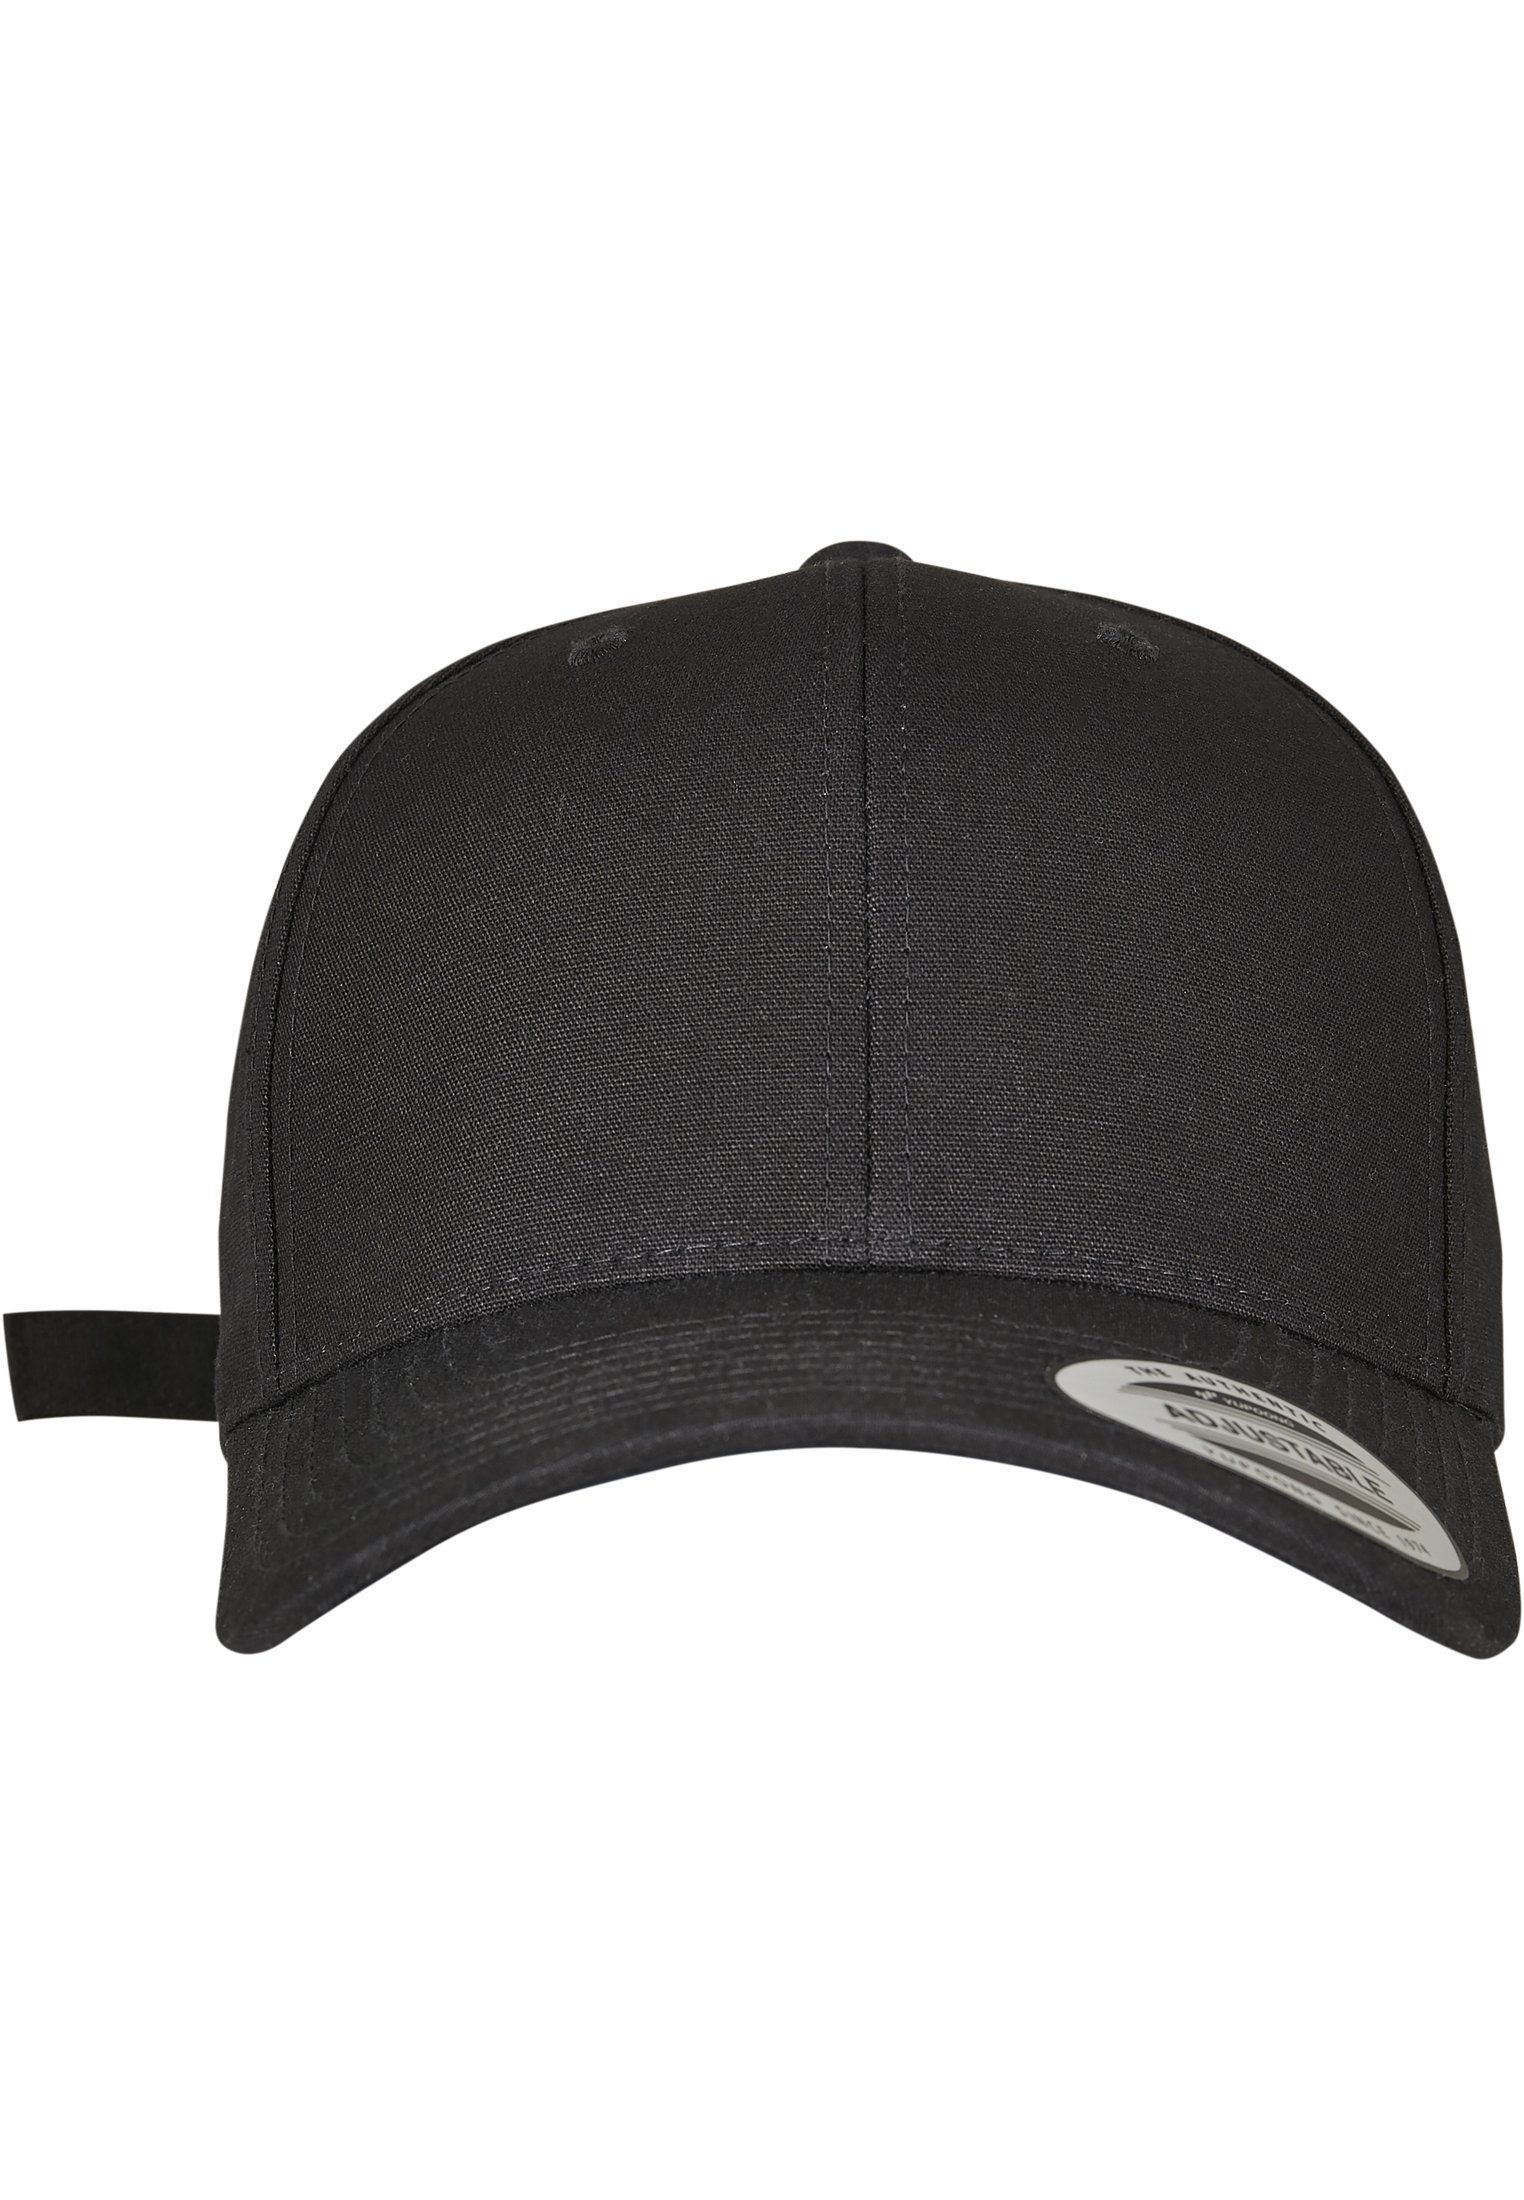 black Cap Flex Snap Snapback 6-Panel Flexfit Curved Metal